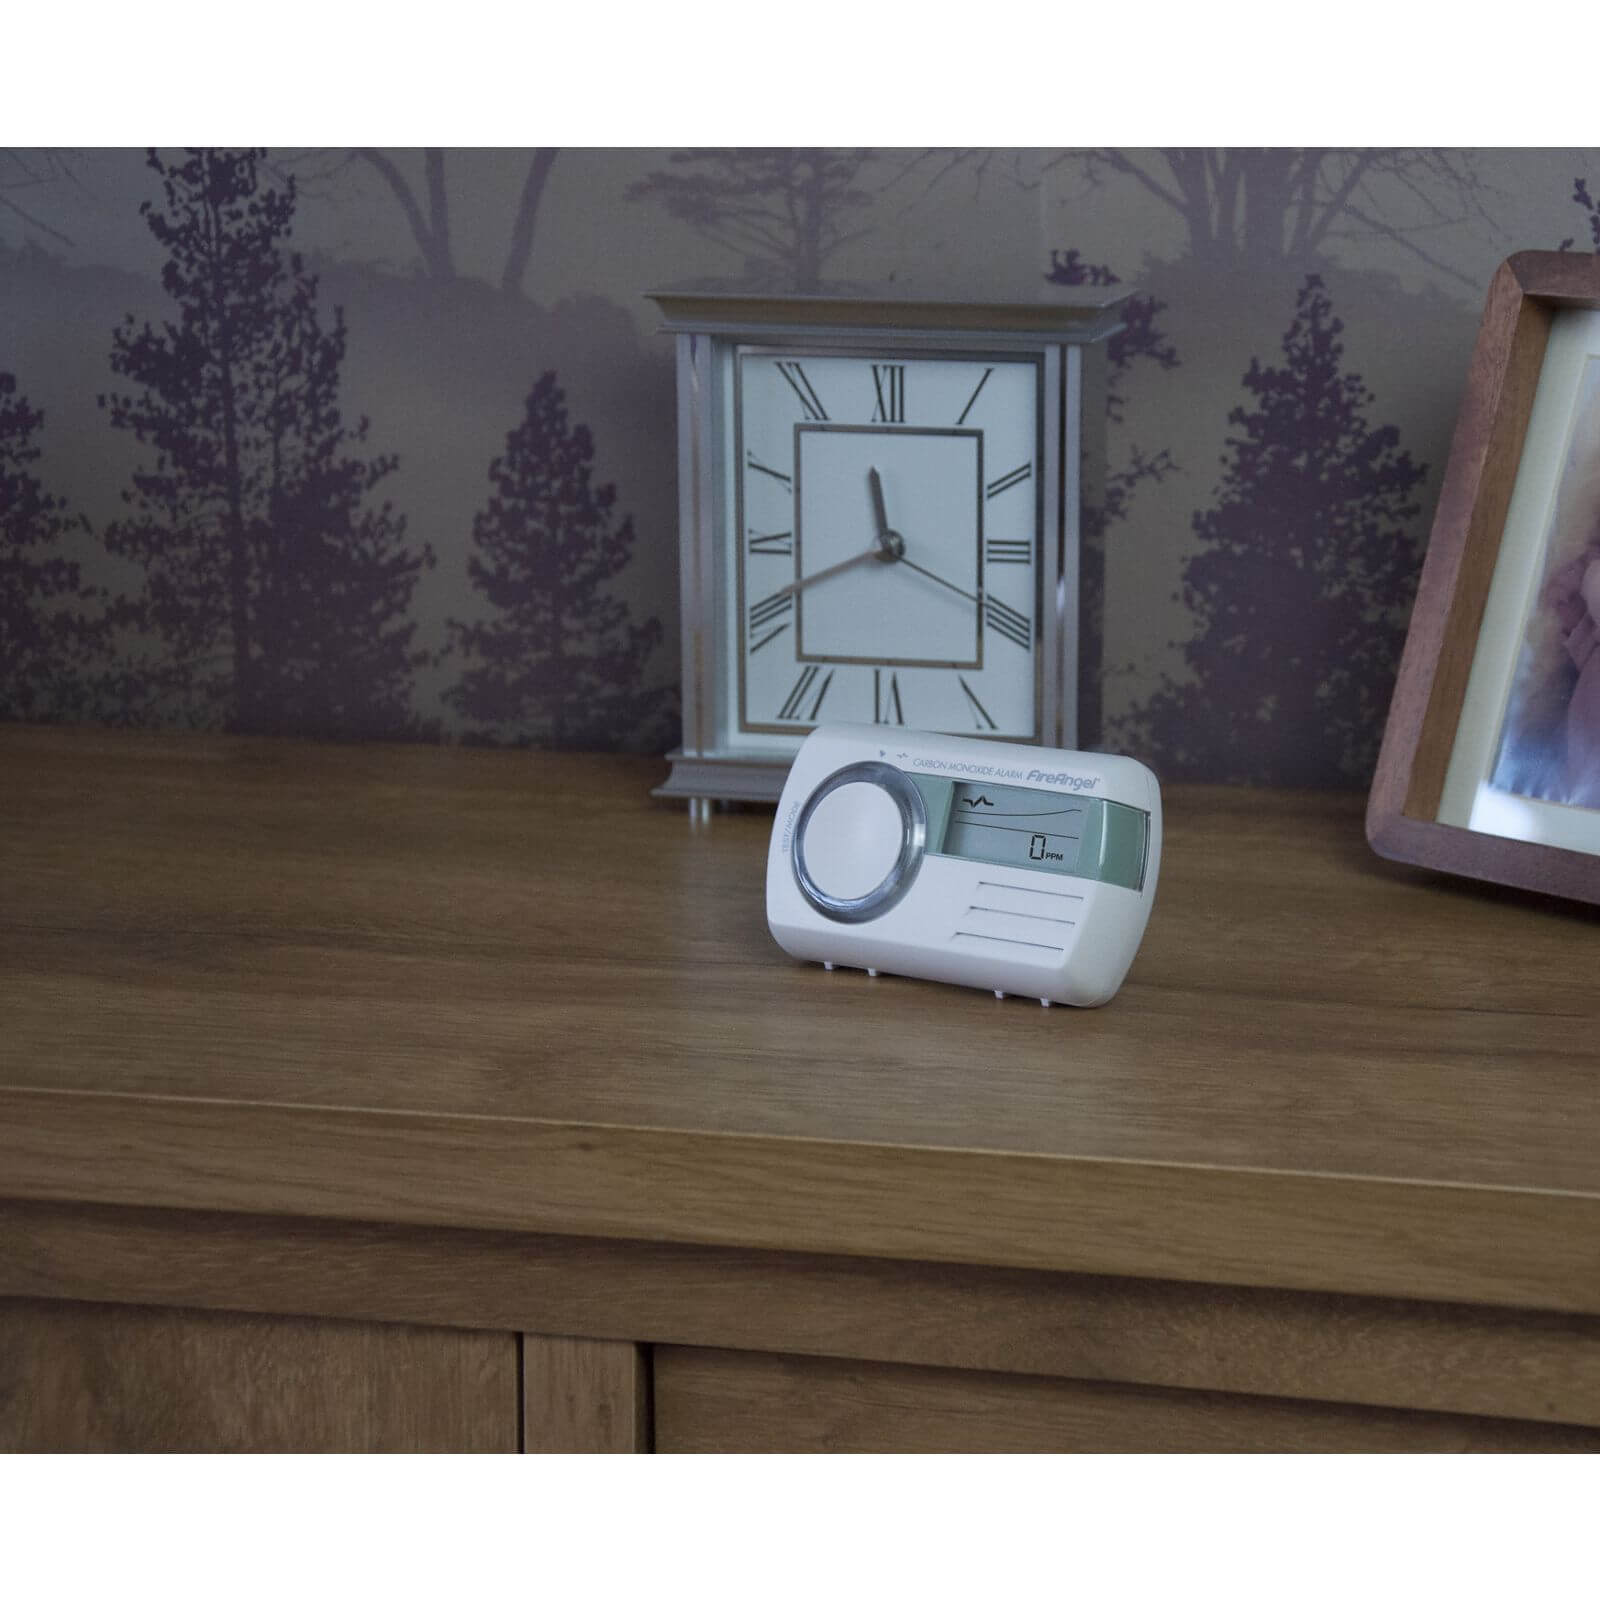 Carbon Monoxide Alarm Digital 7 Year Life